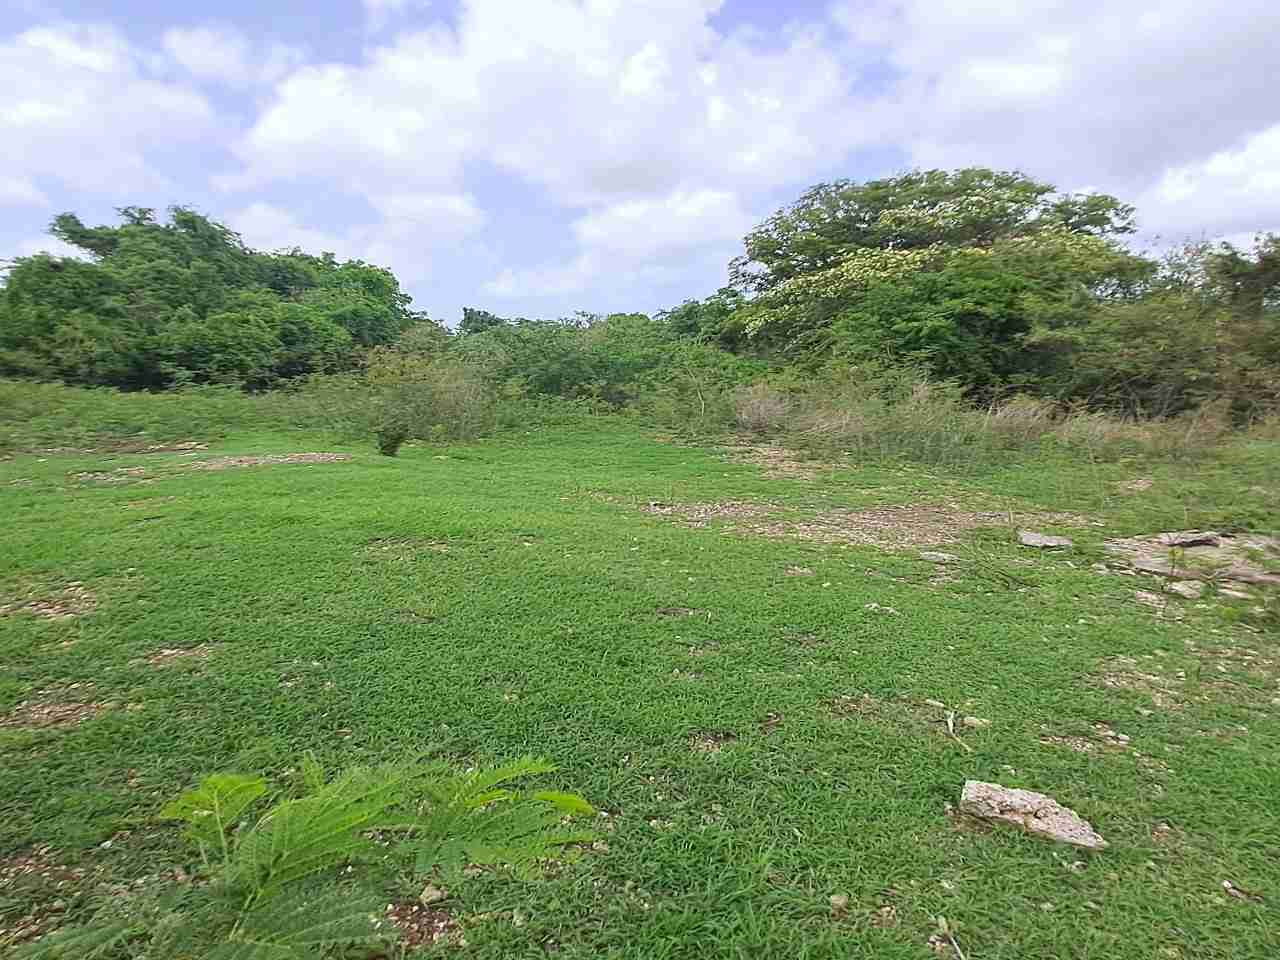 Land for sale Barbados – Nicholls Road, Seaview, St. James